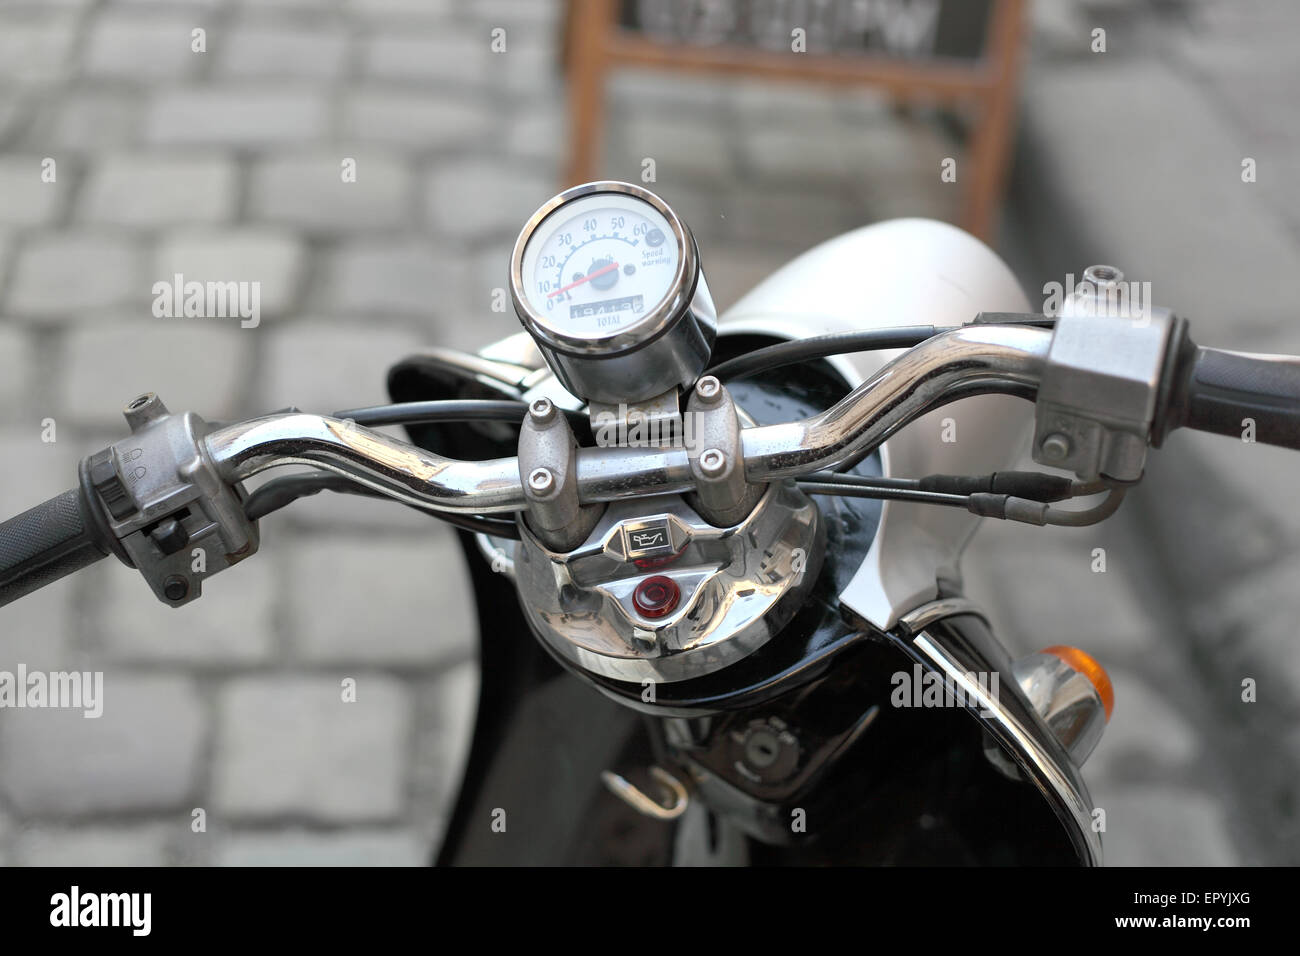 On a photo steering wheel motorcycle Stock Photo